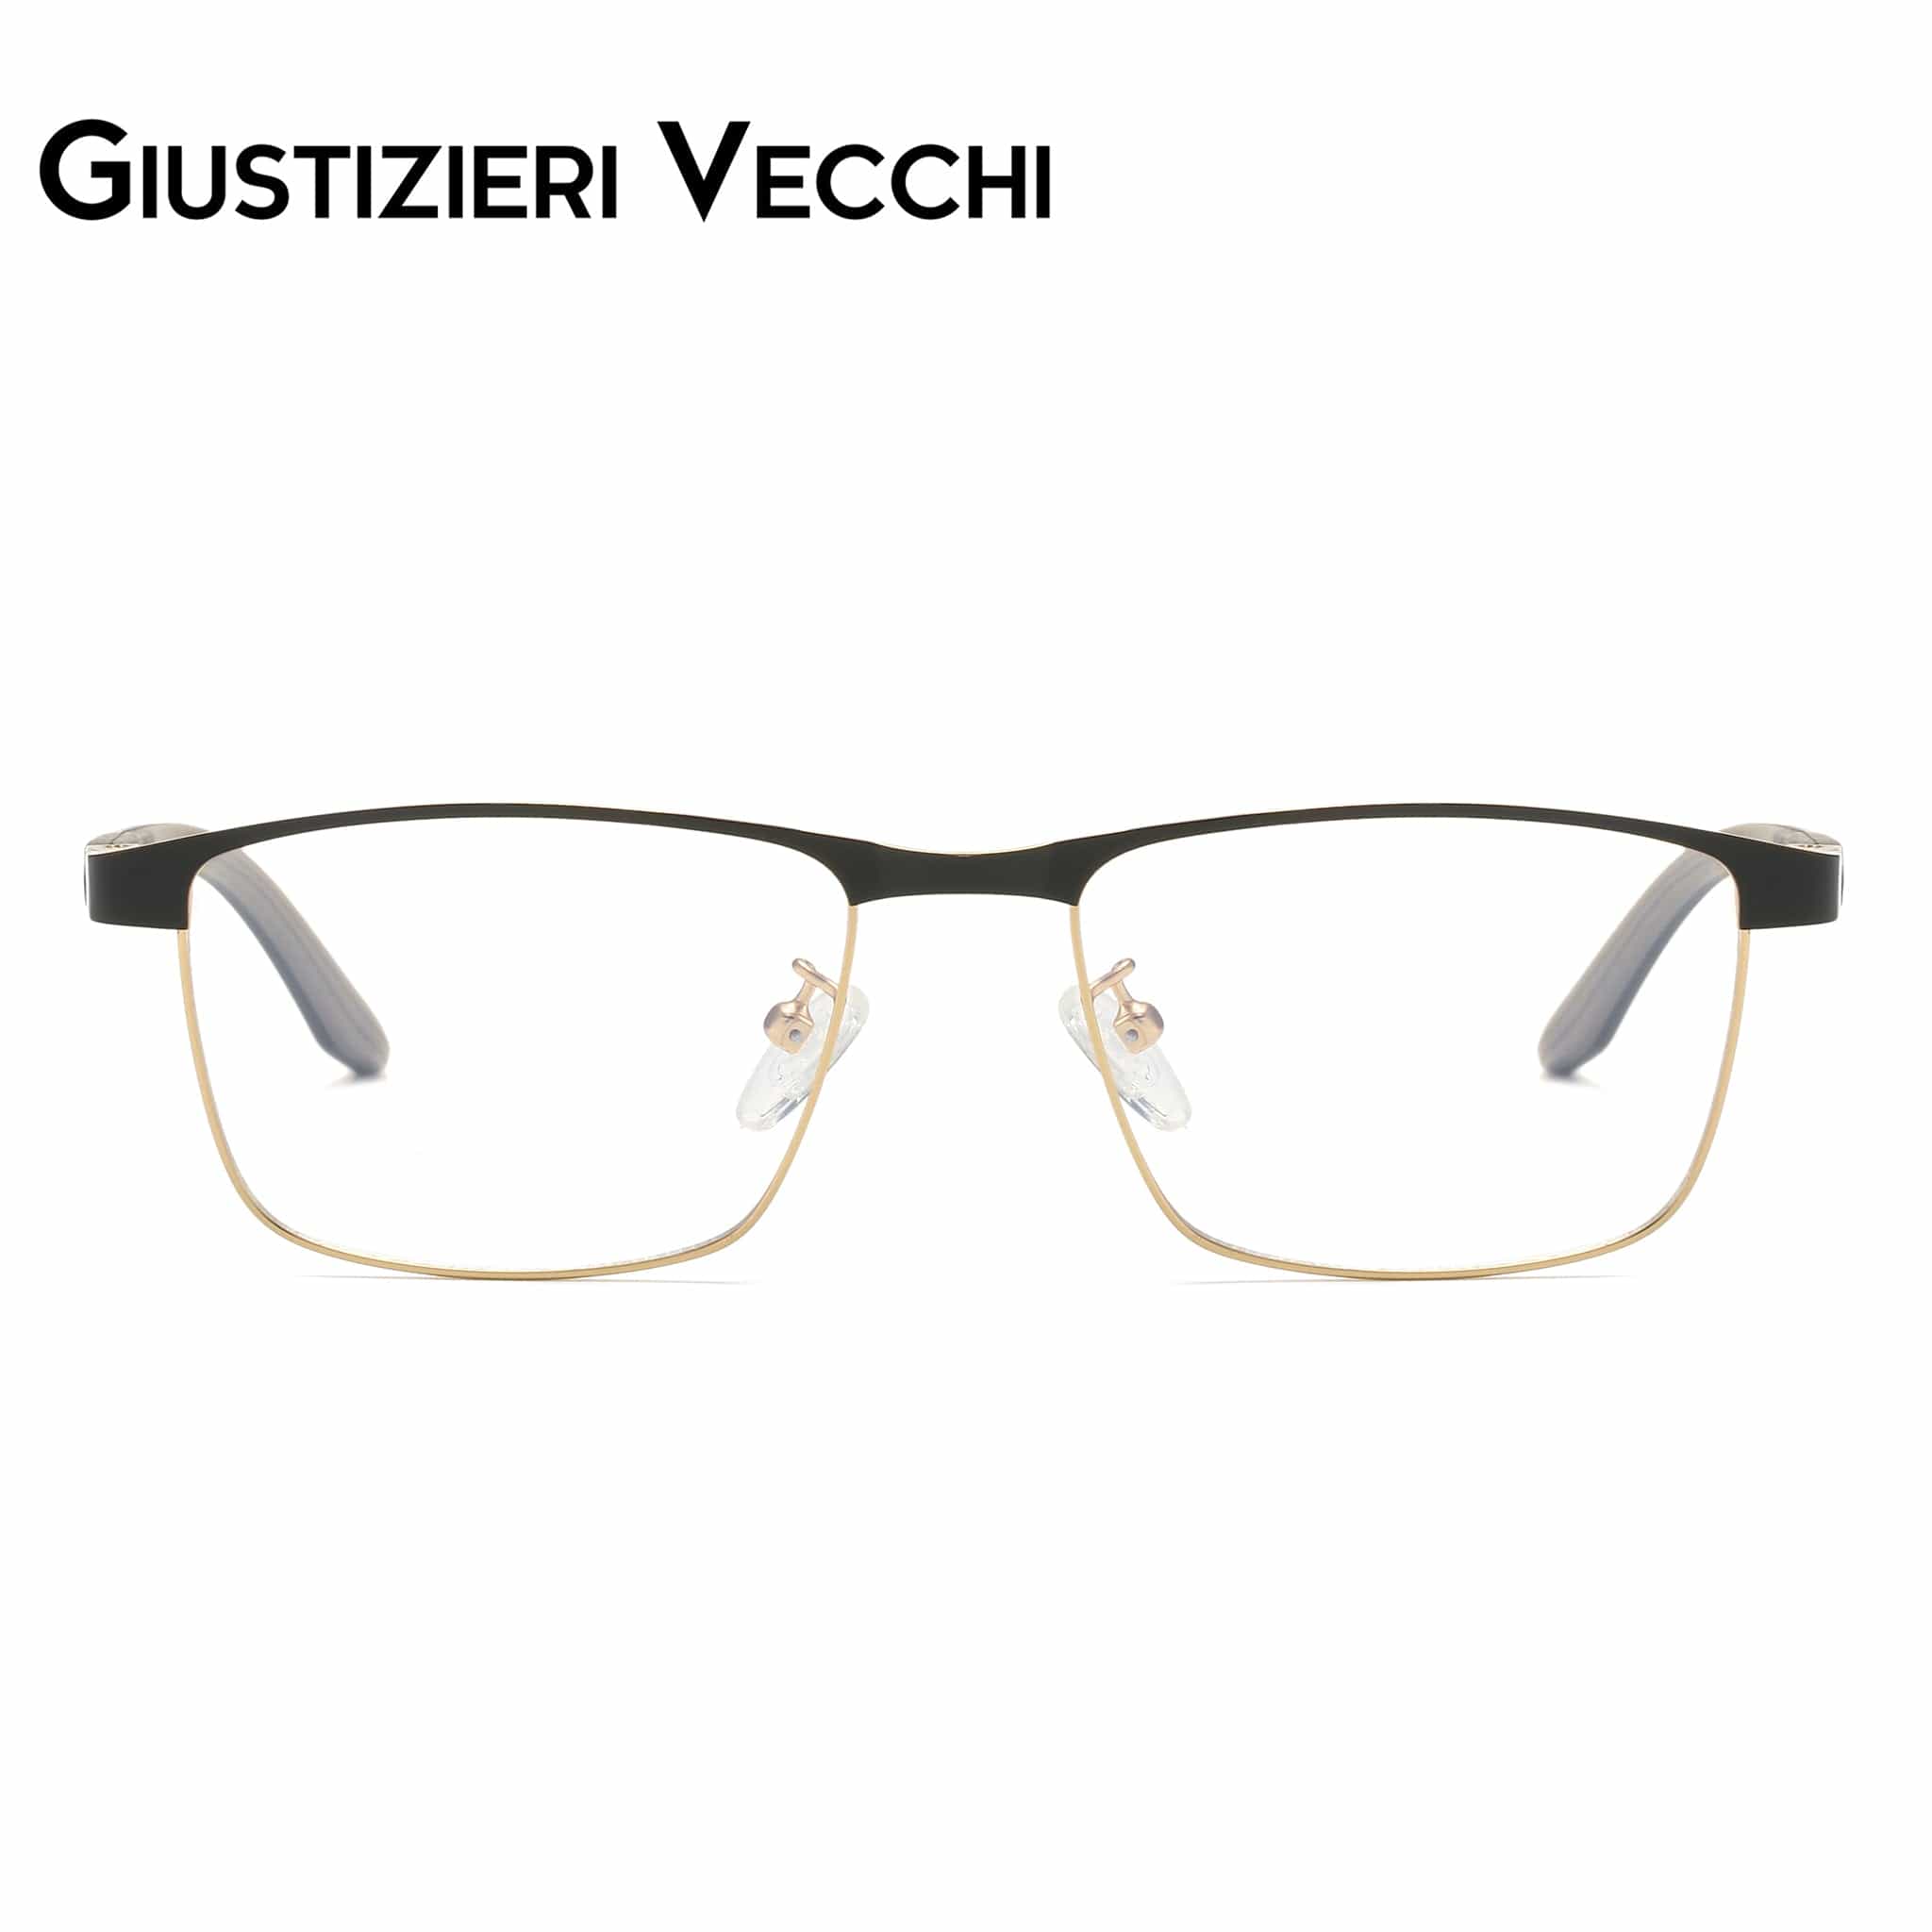 GIUSTIZIERI VECCHI Eyeglasses Medium / Black with Gold Summer Breeze Duo